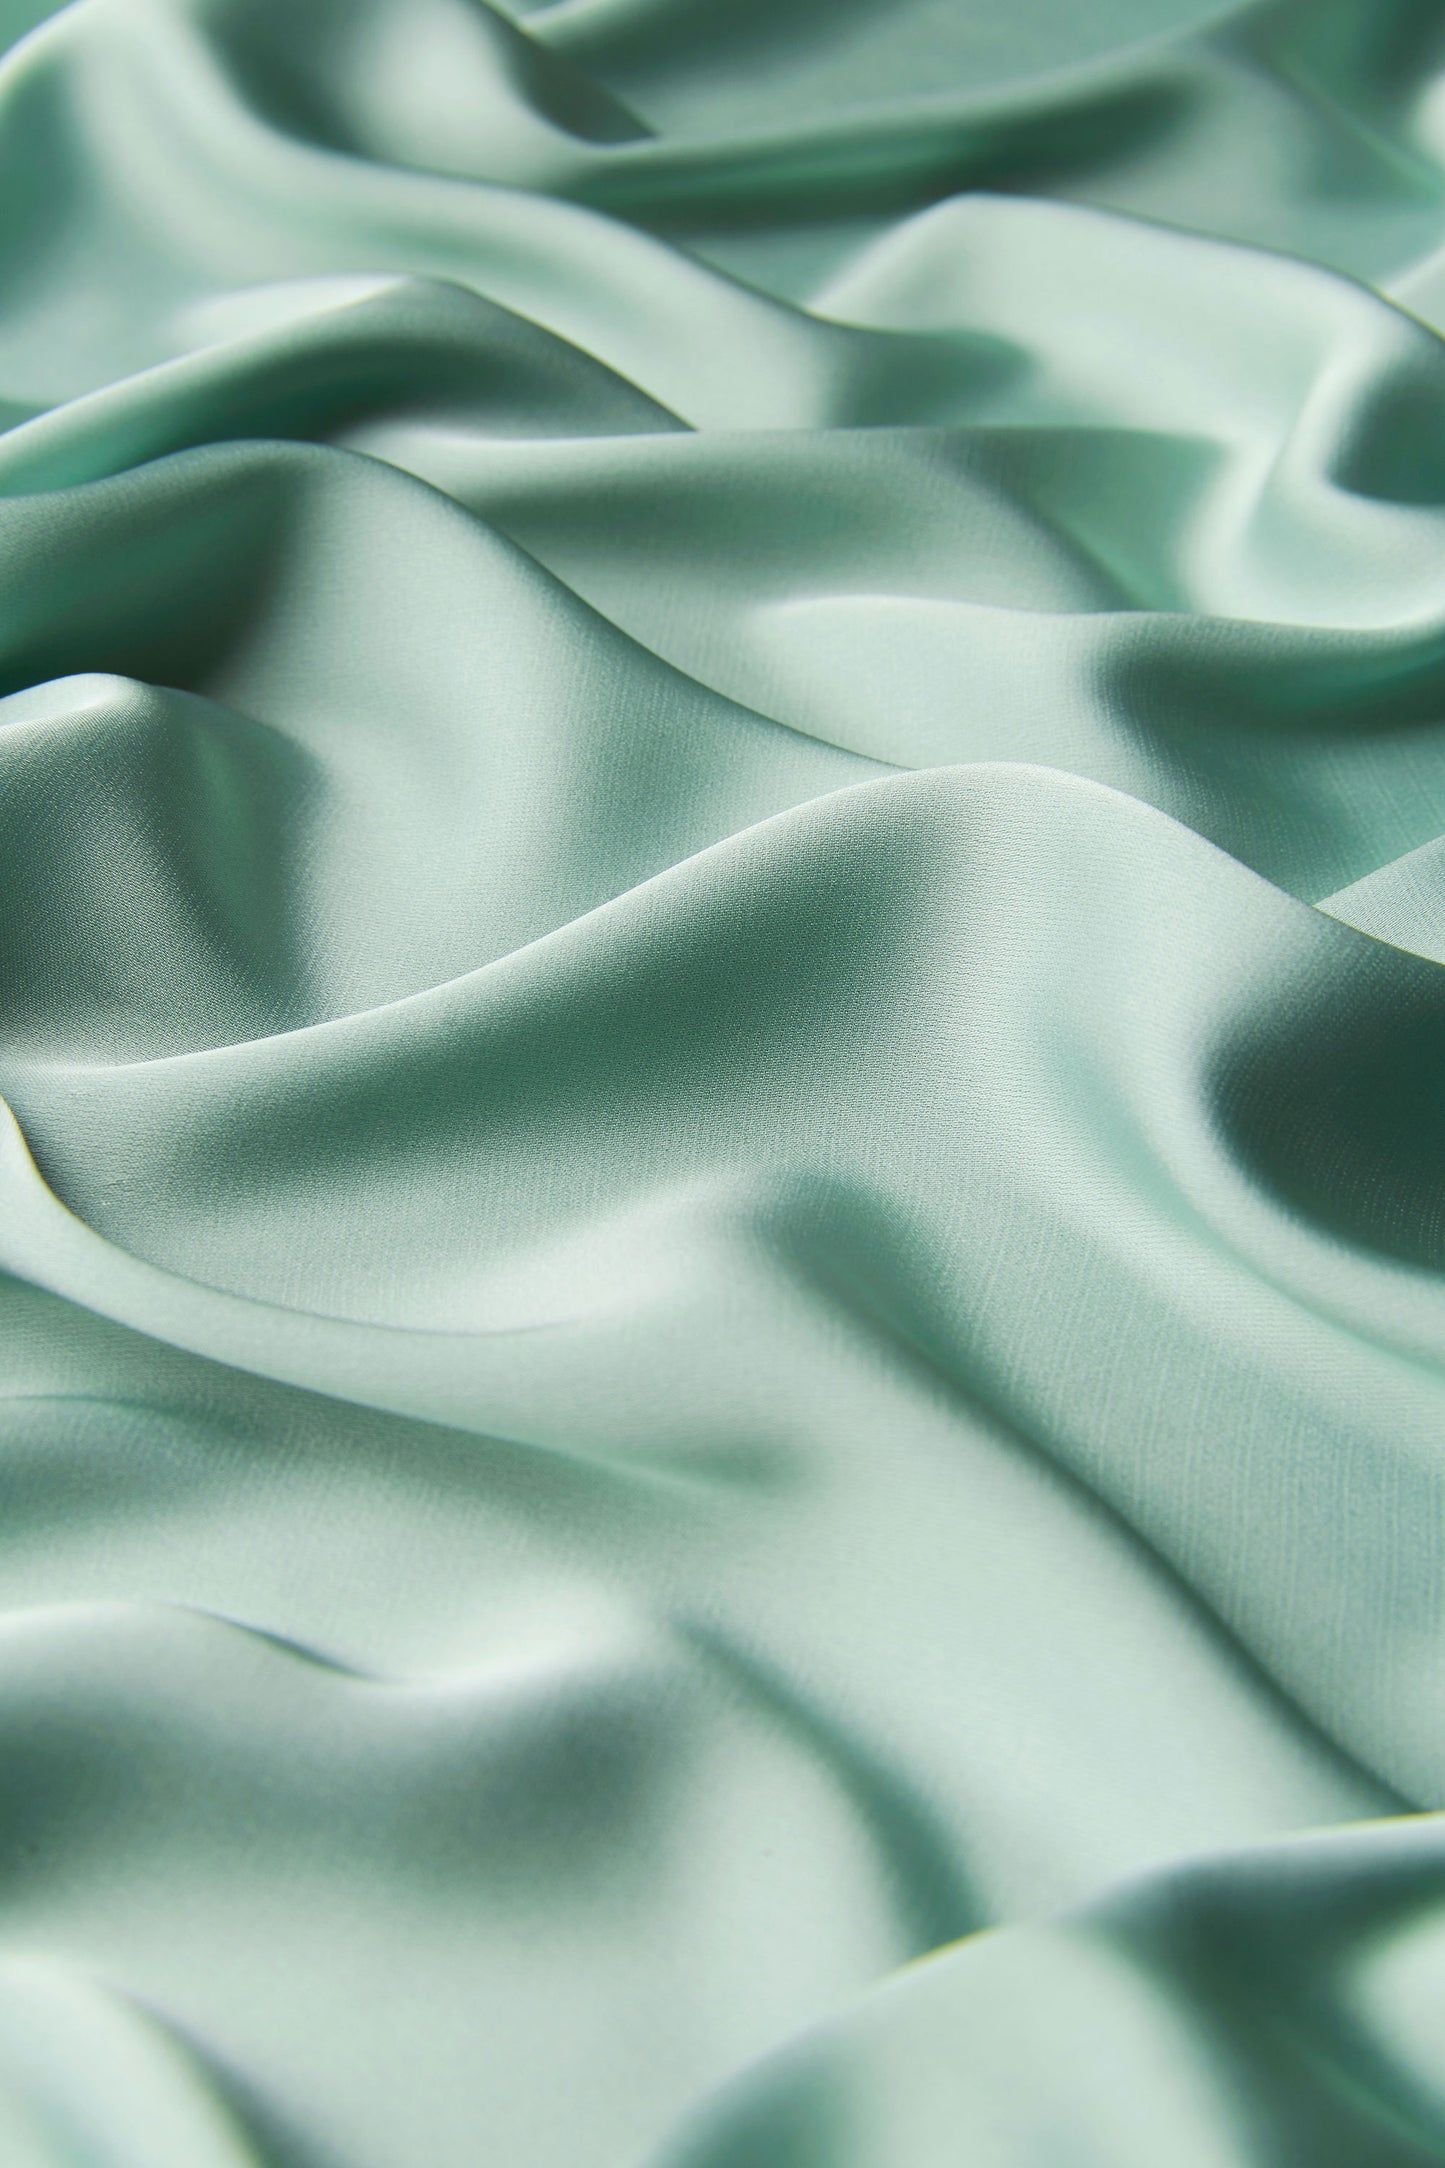 A close up of a green silk fabric - Silk